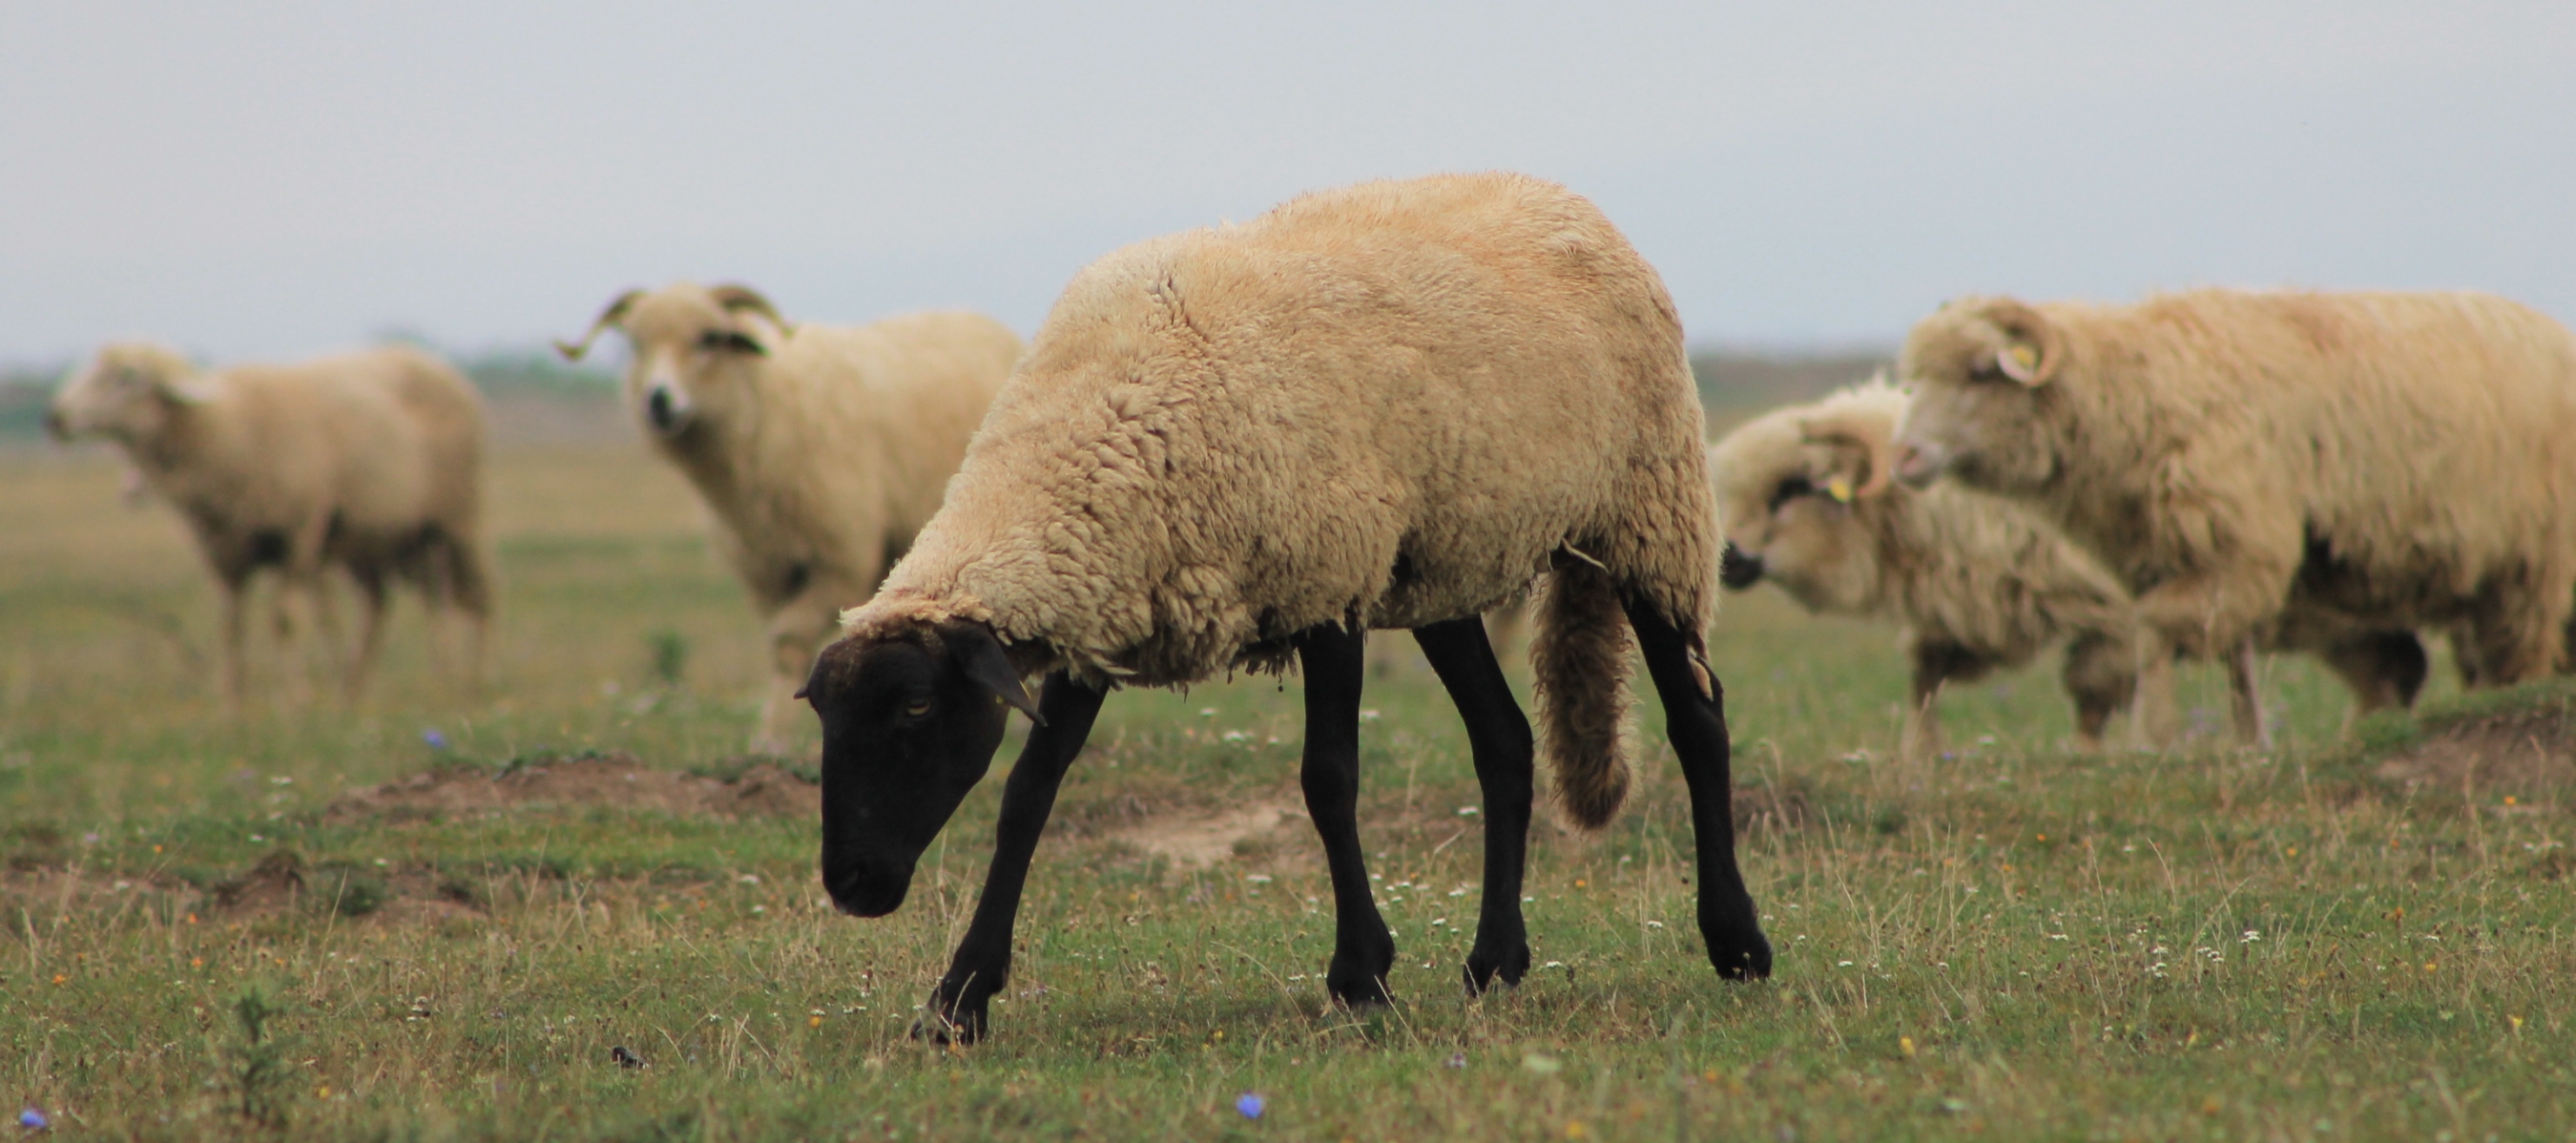 Romanian sheep - photo taken from the Moeke Yarns website here